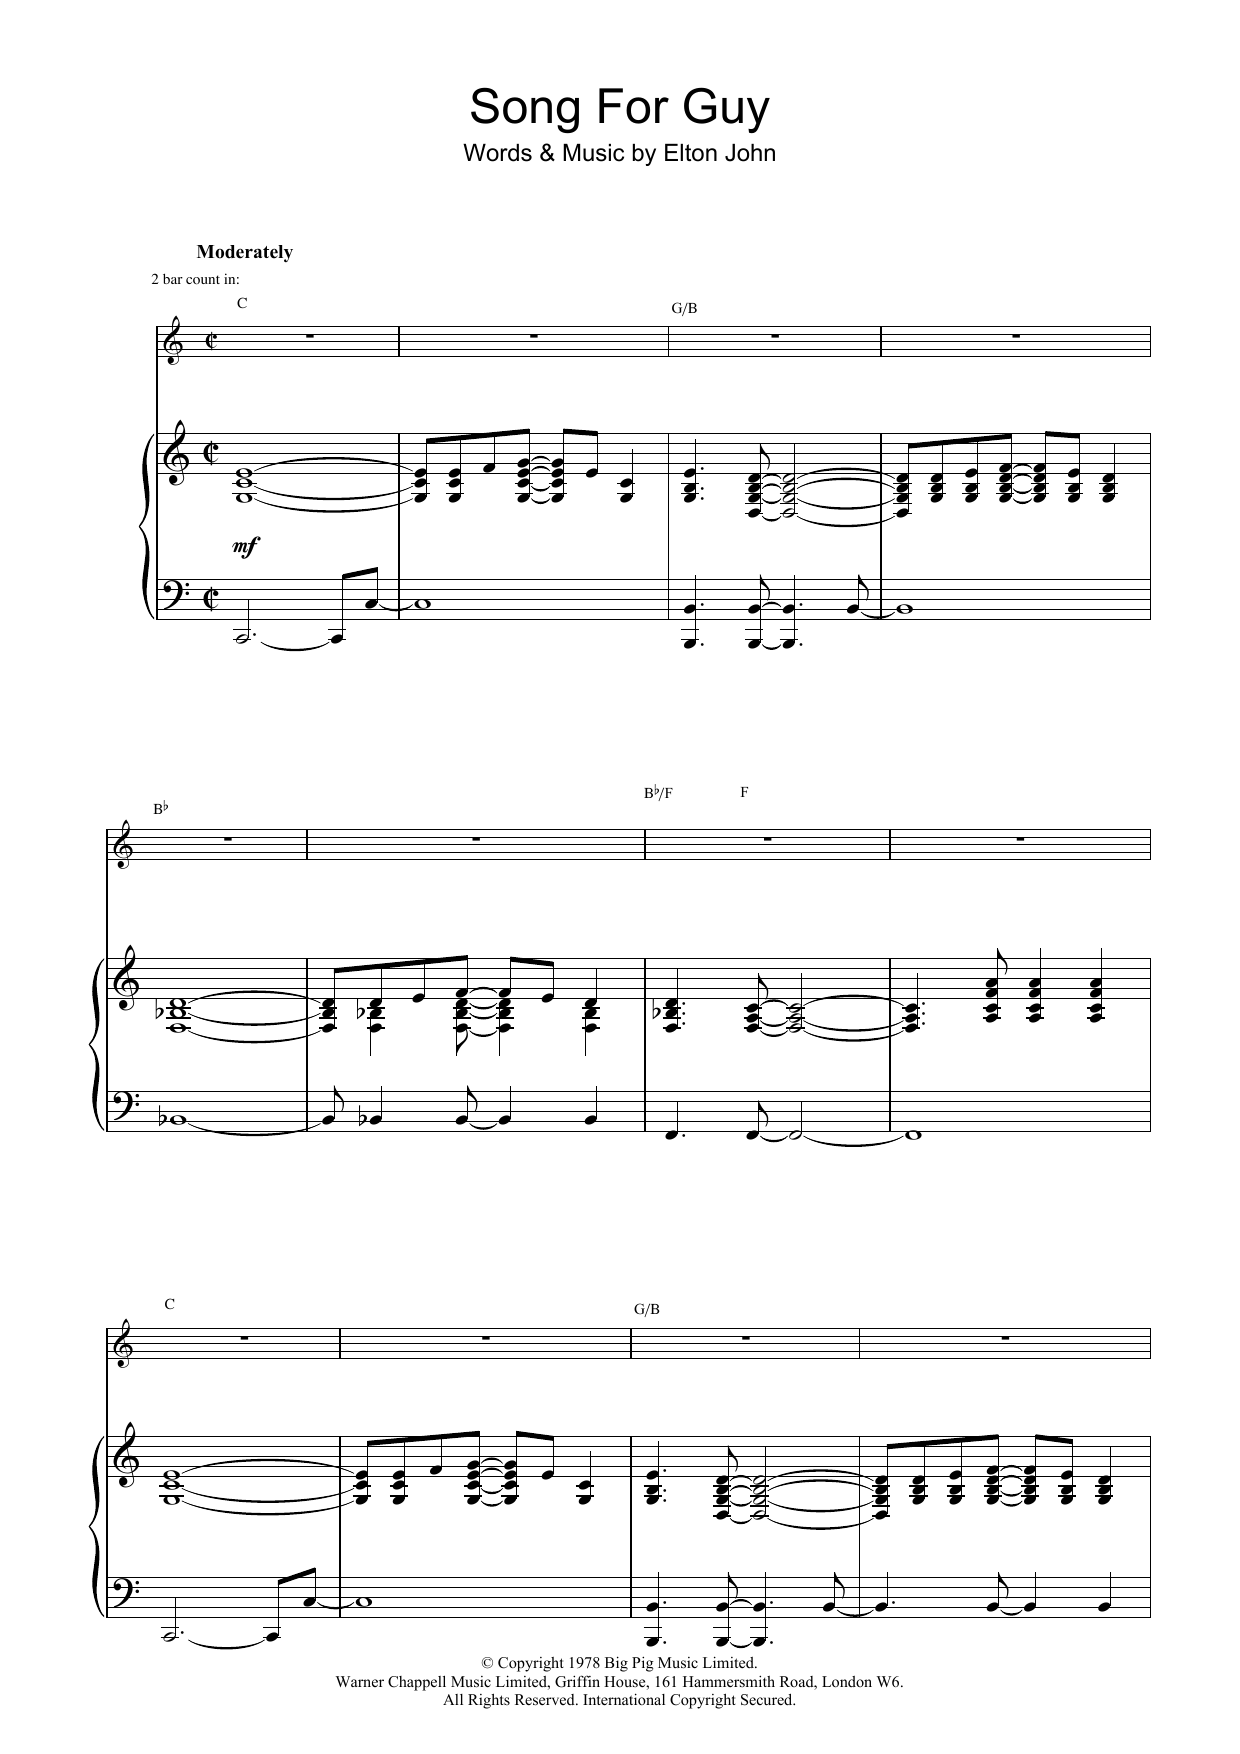 Elton John Song For Guy Sheet Music Notes & Chords for Keyboard - Download or Print PDF